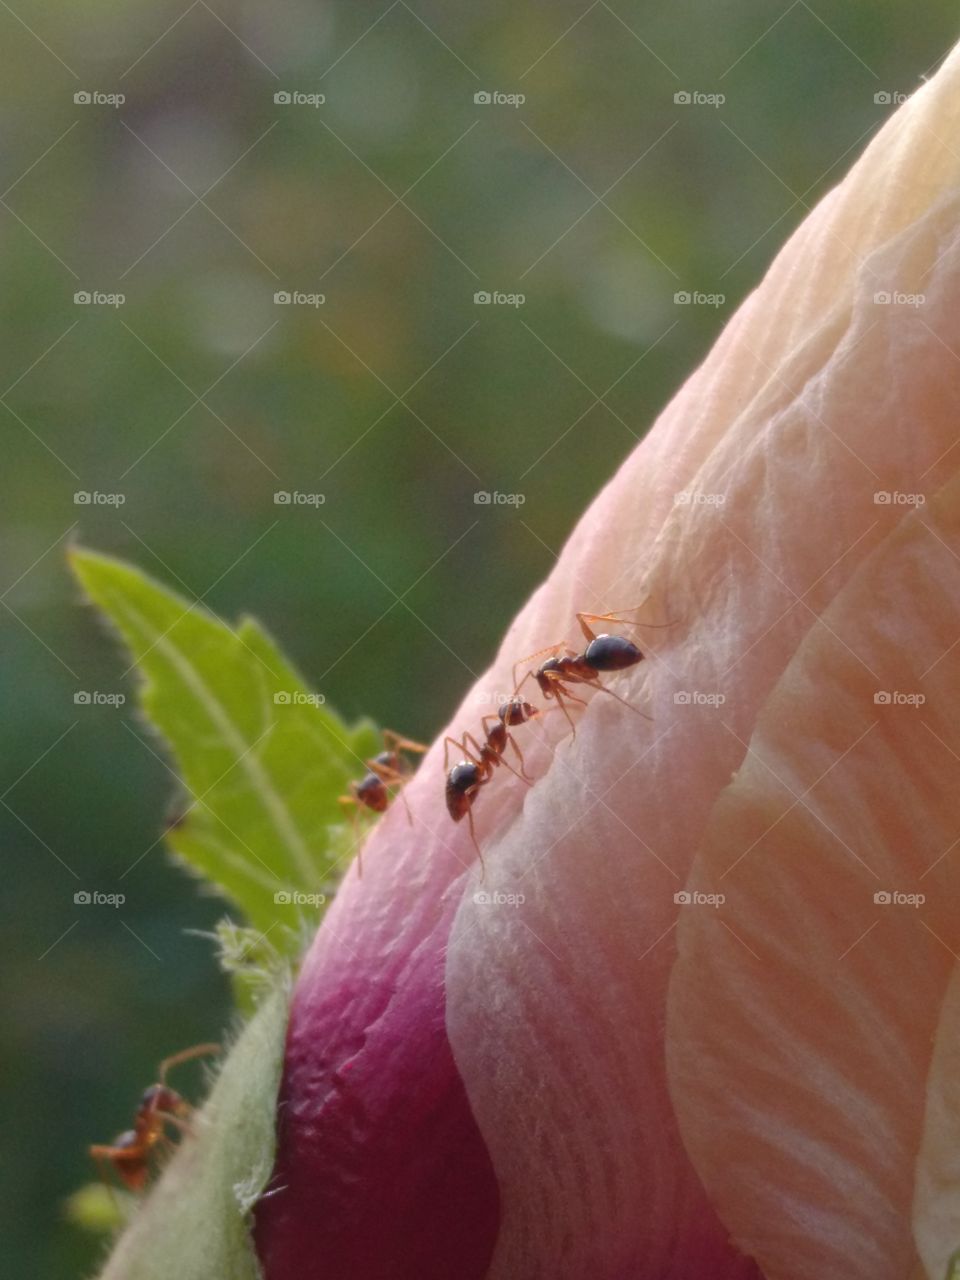 ant on okra flower